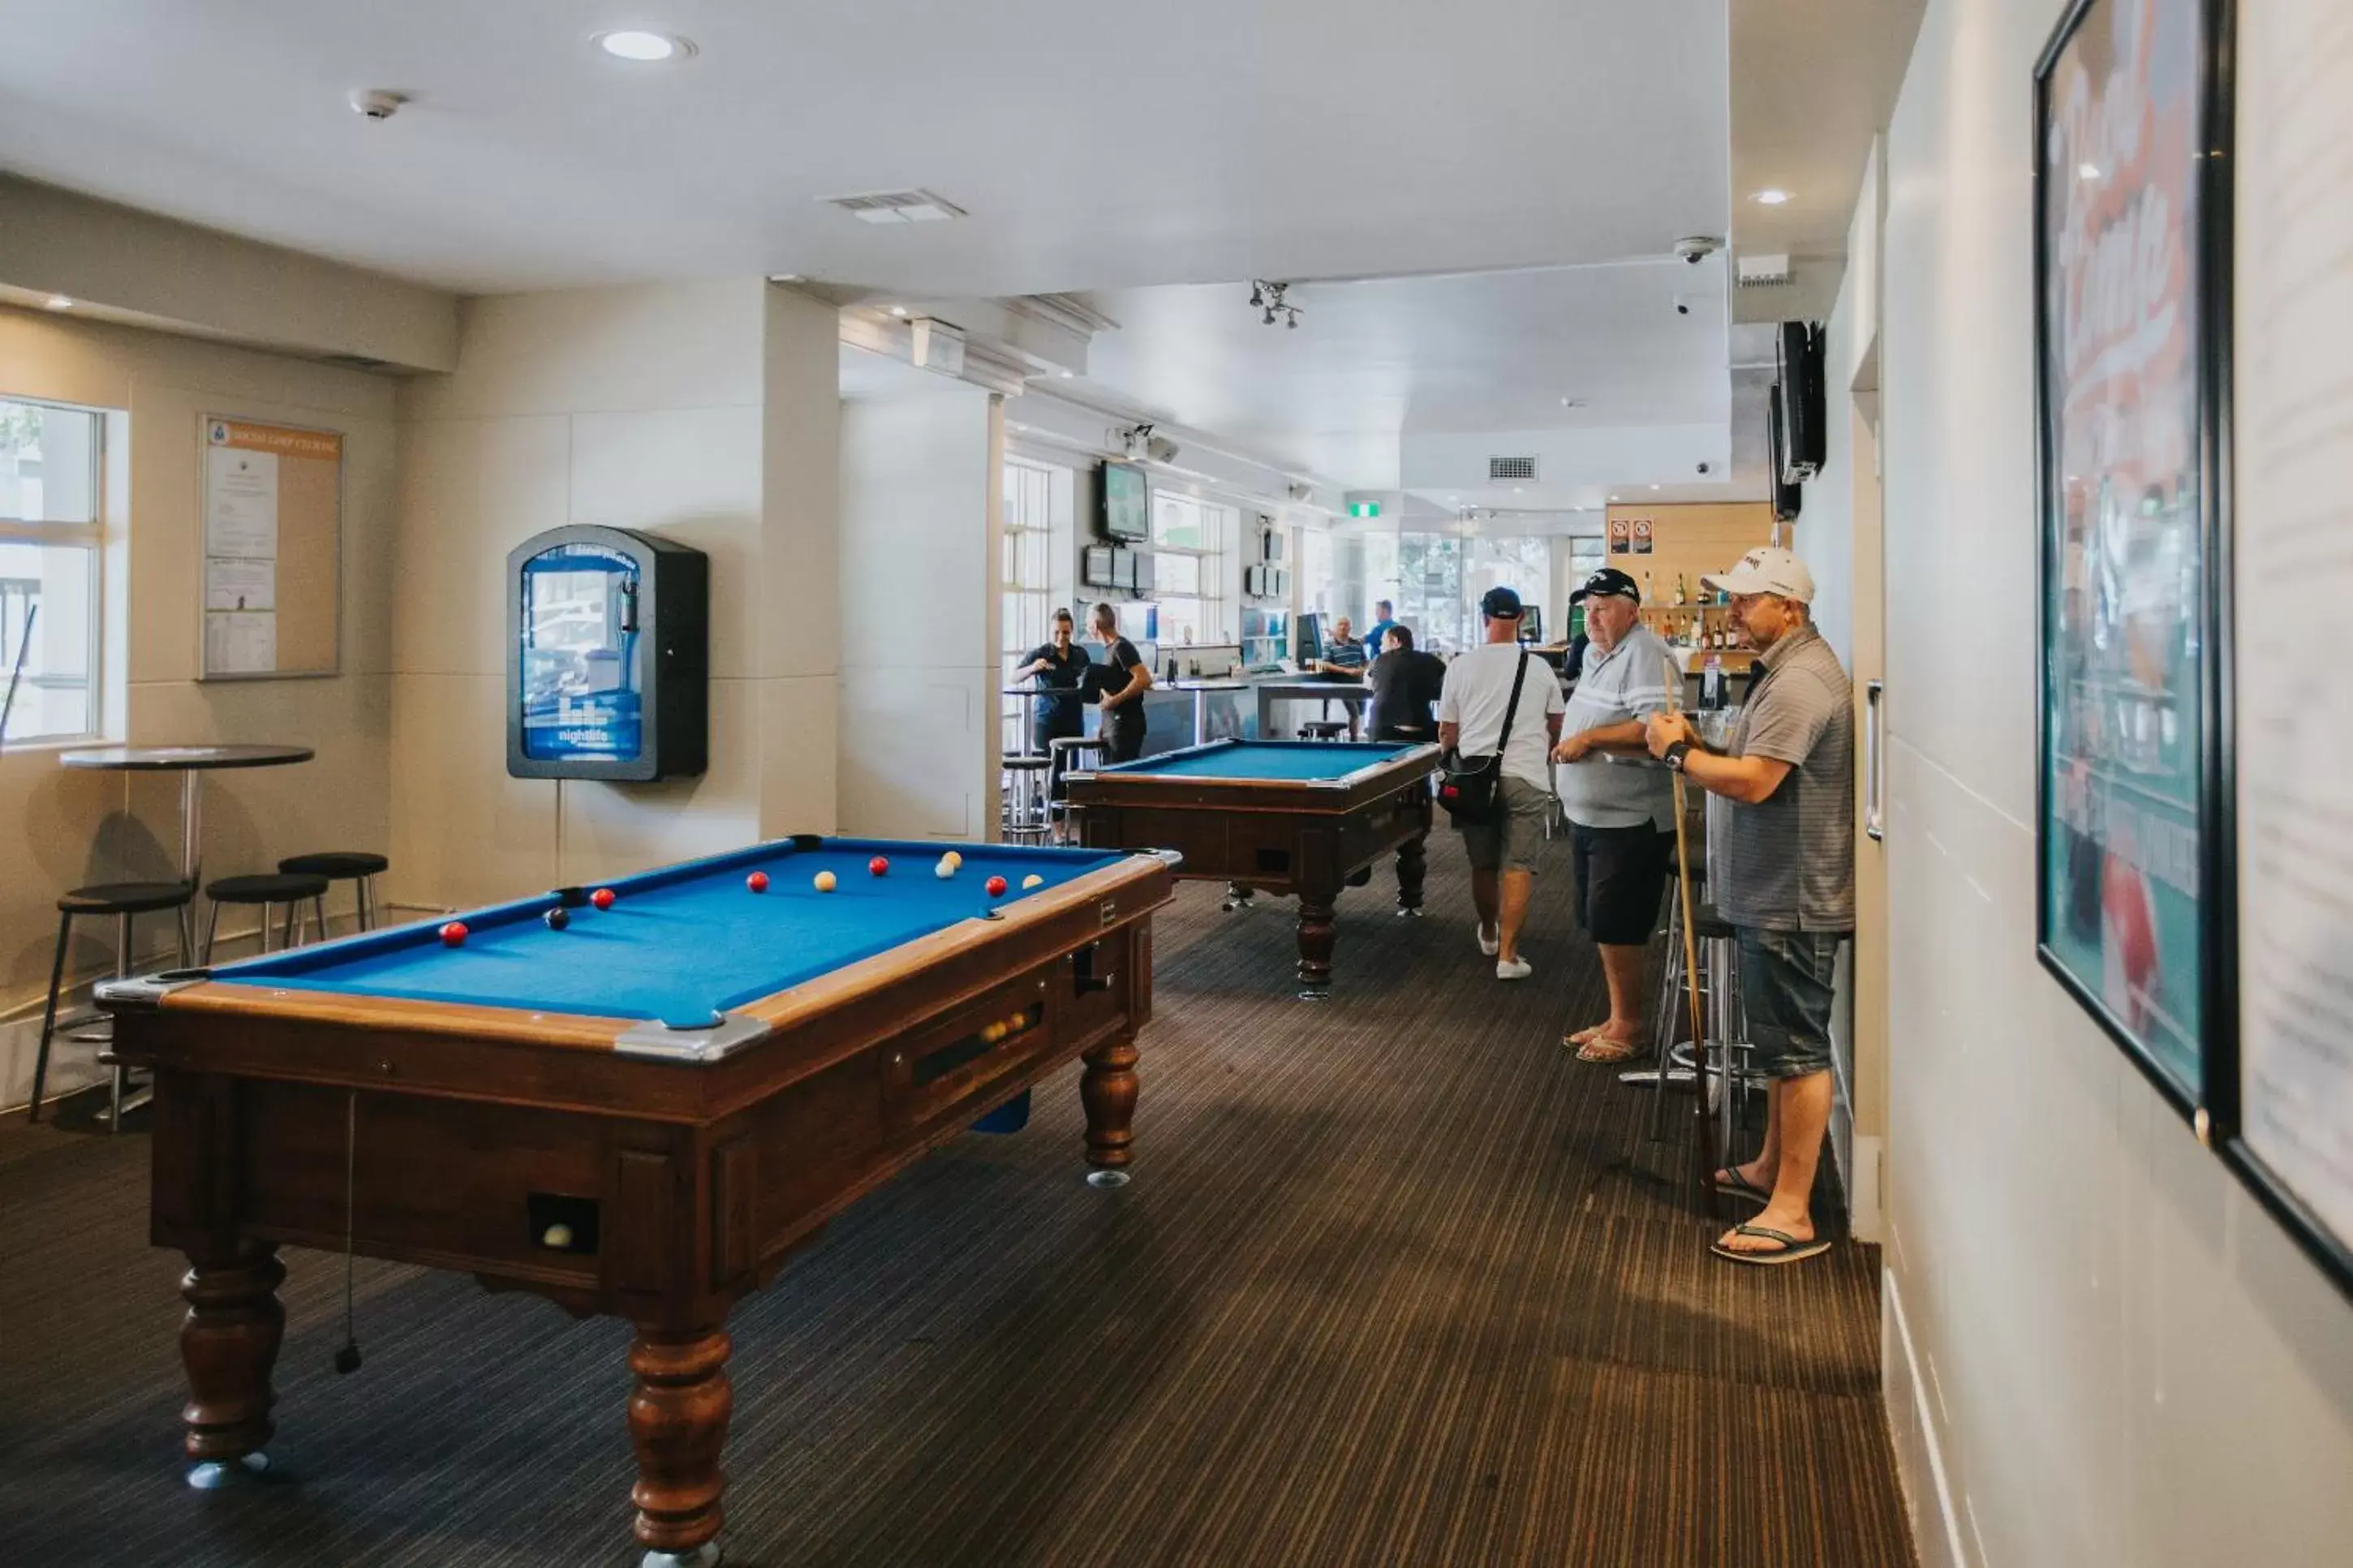 Lounge or bar, Billiards in Port Macquarie Hotel